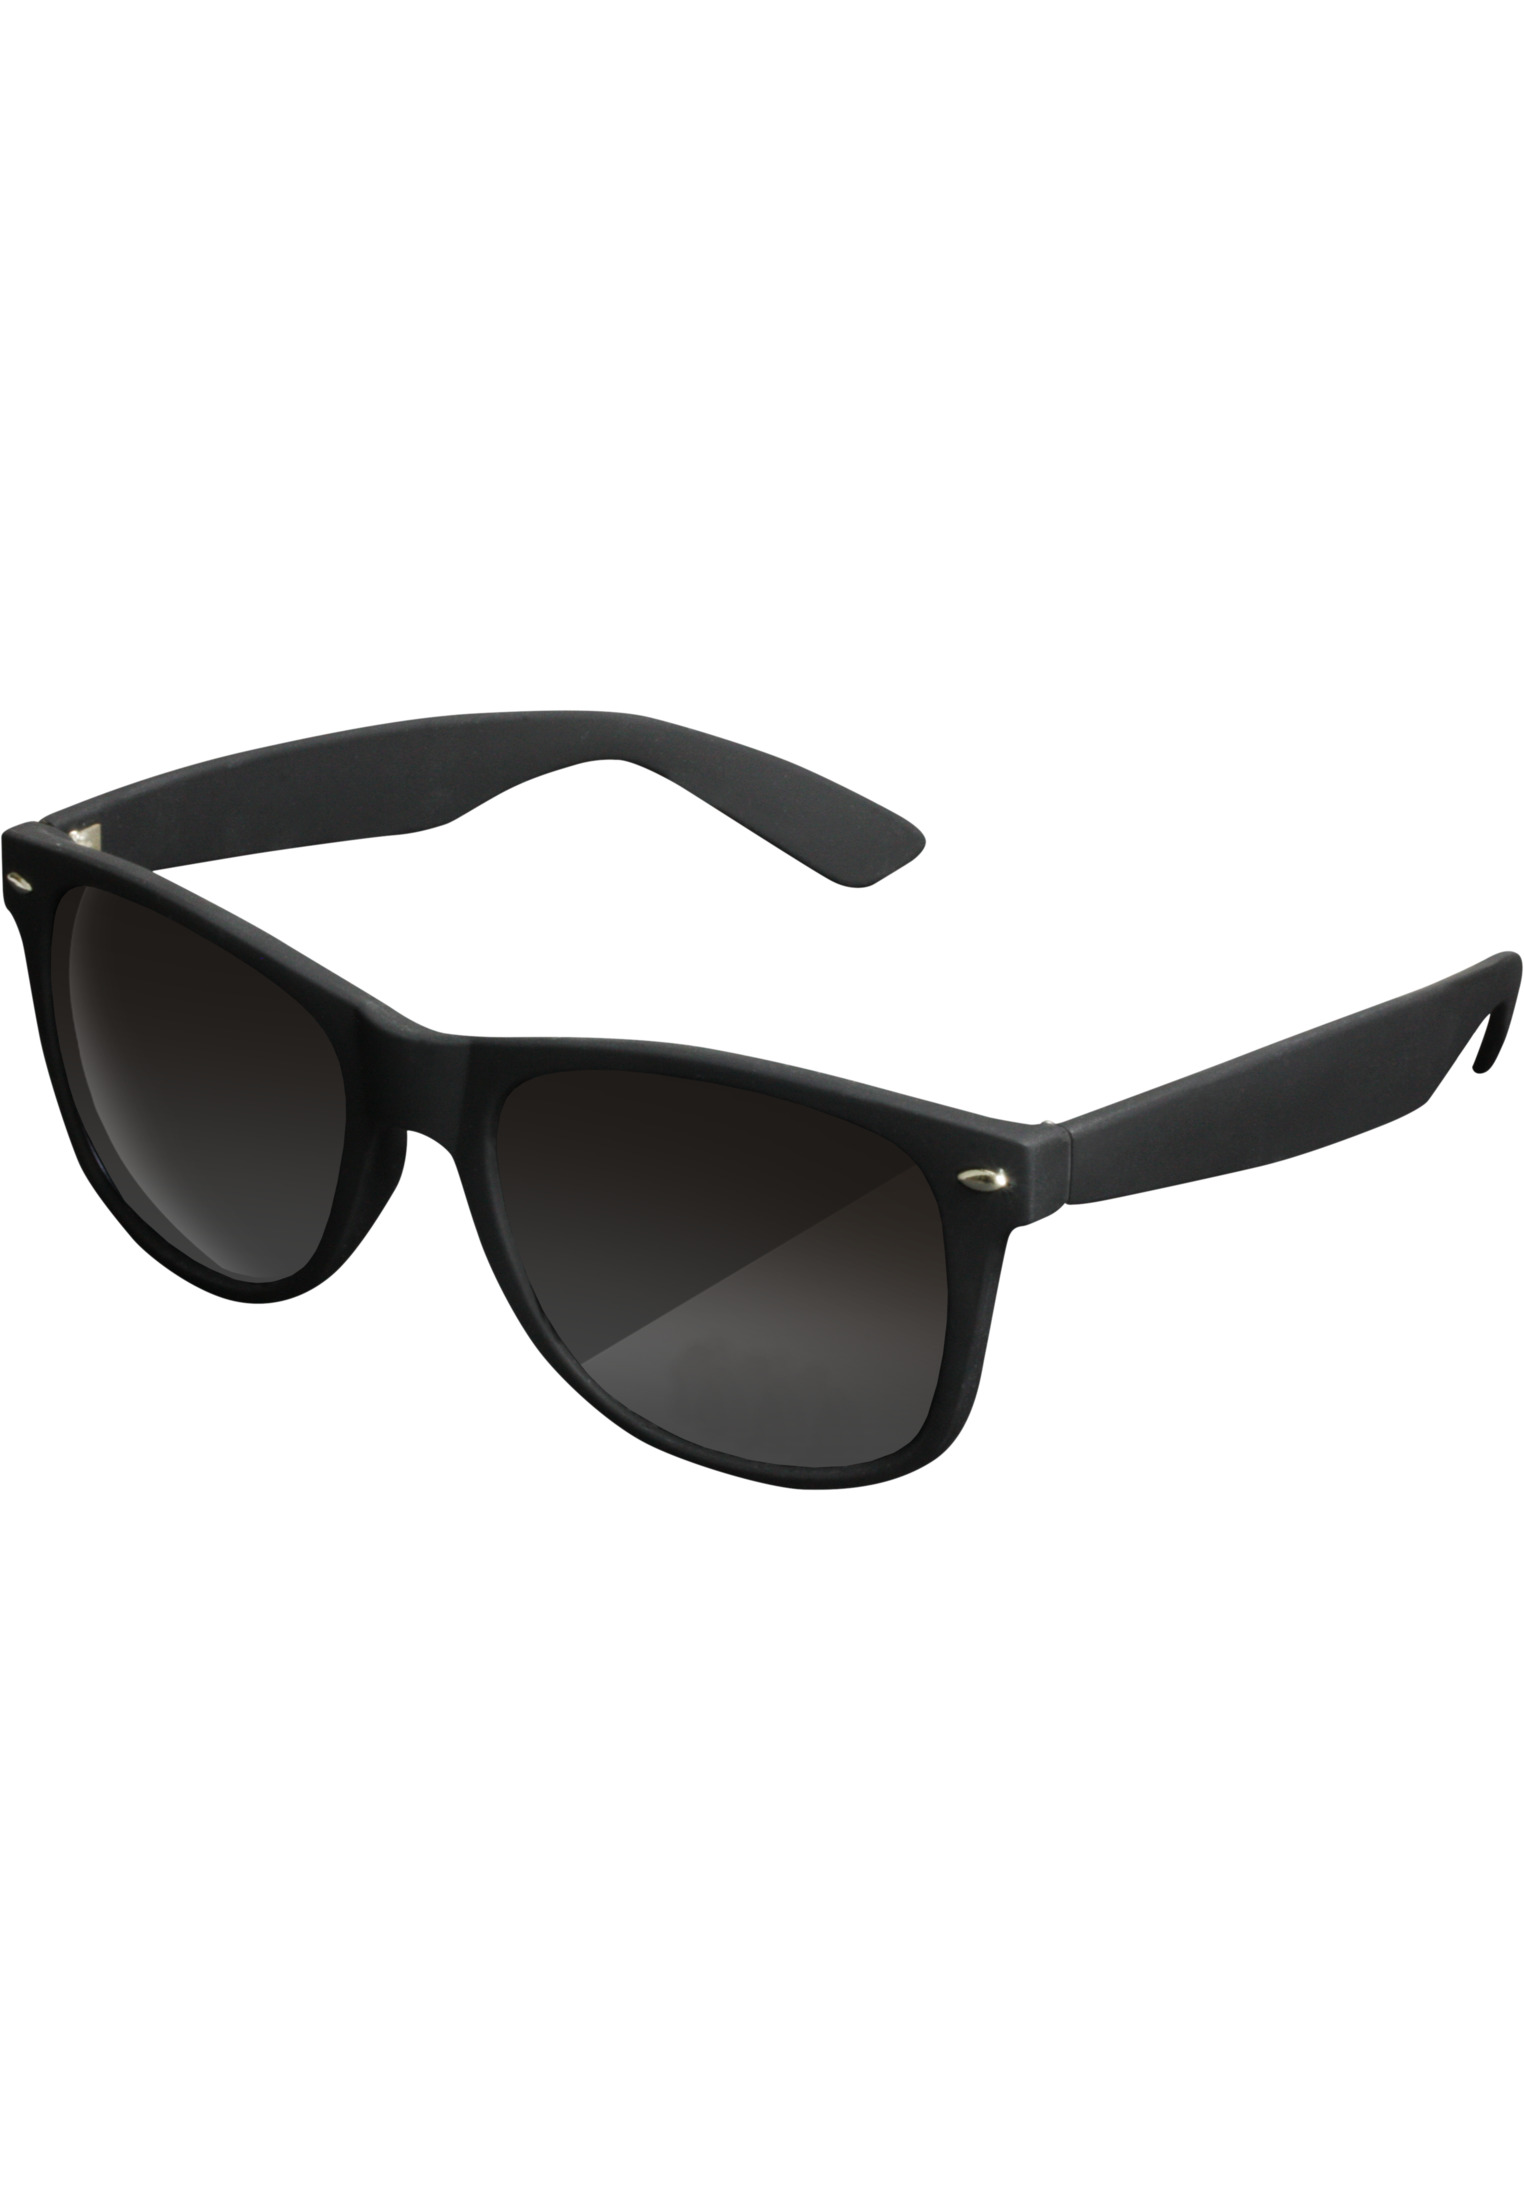 Likoma sunglasses black